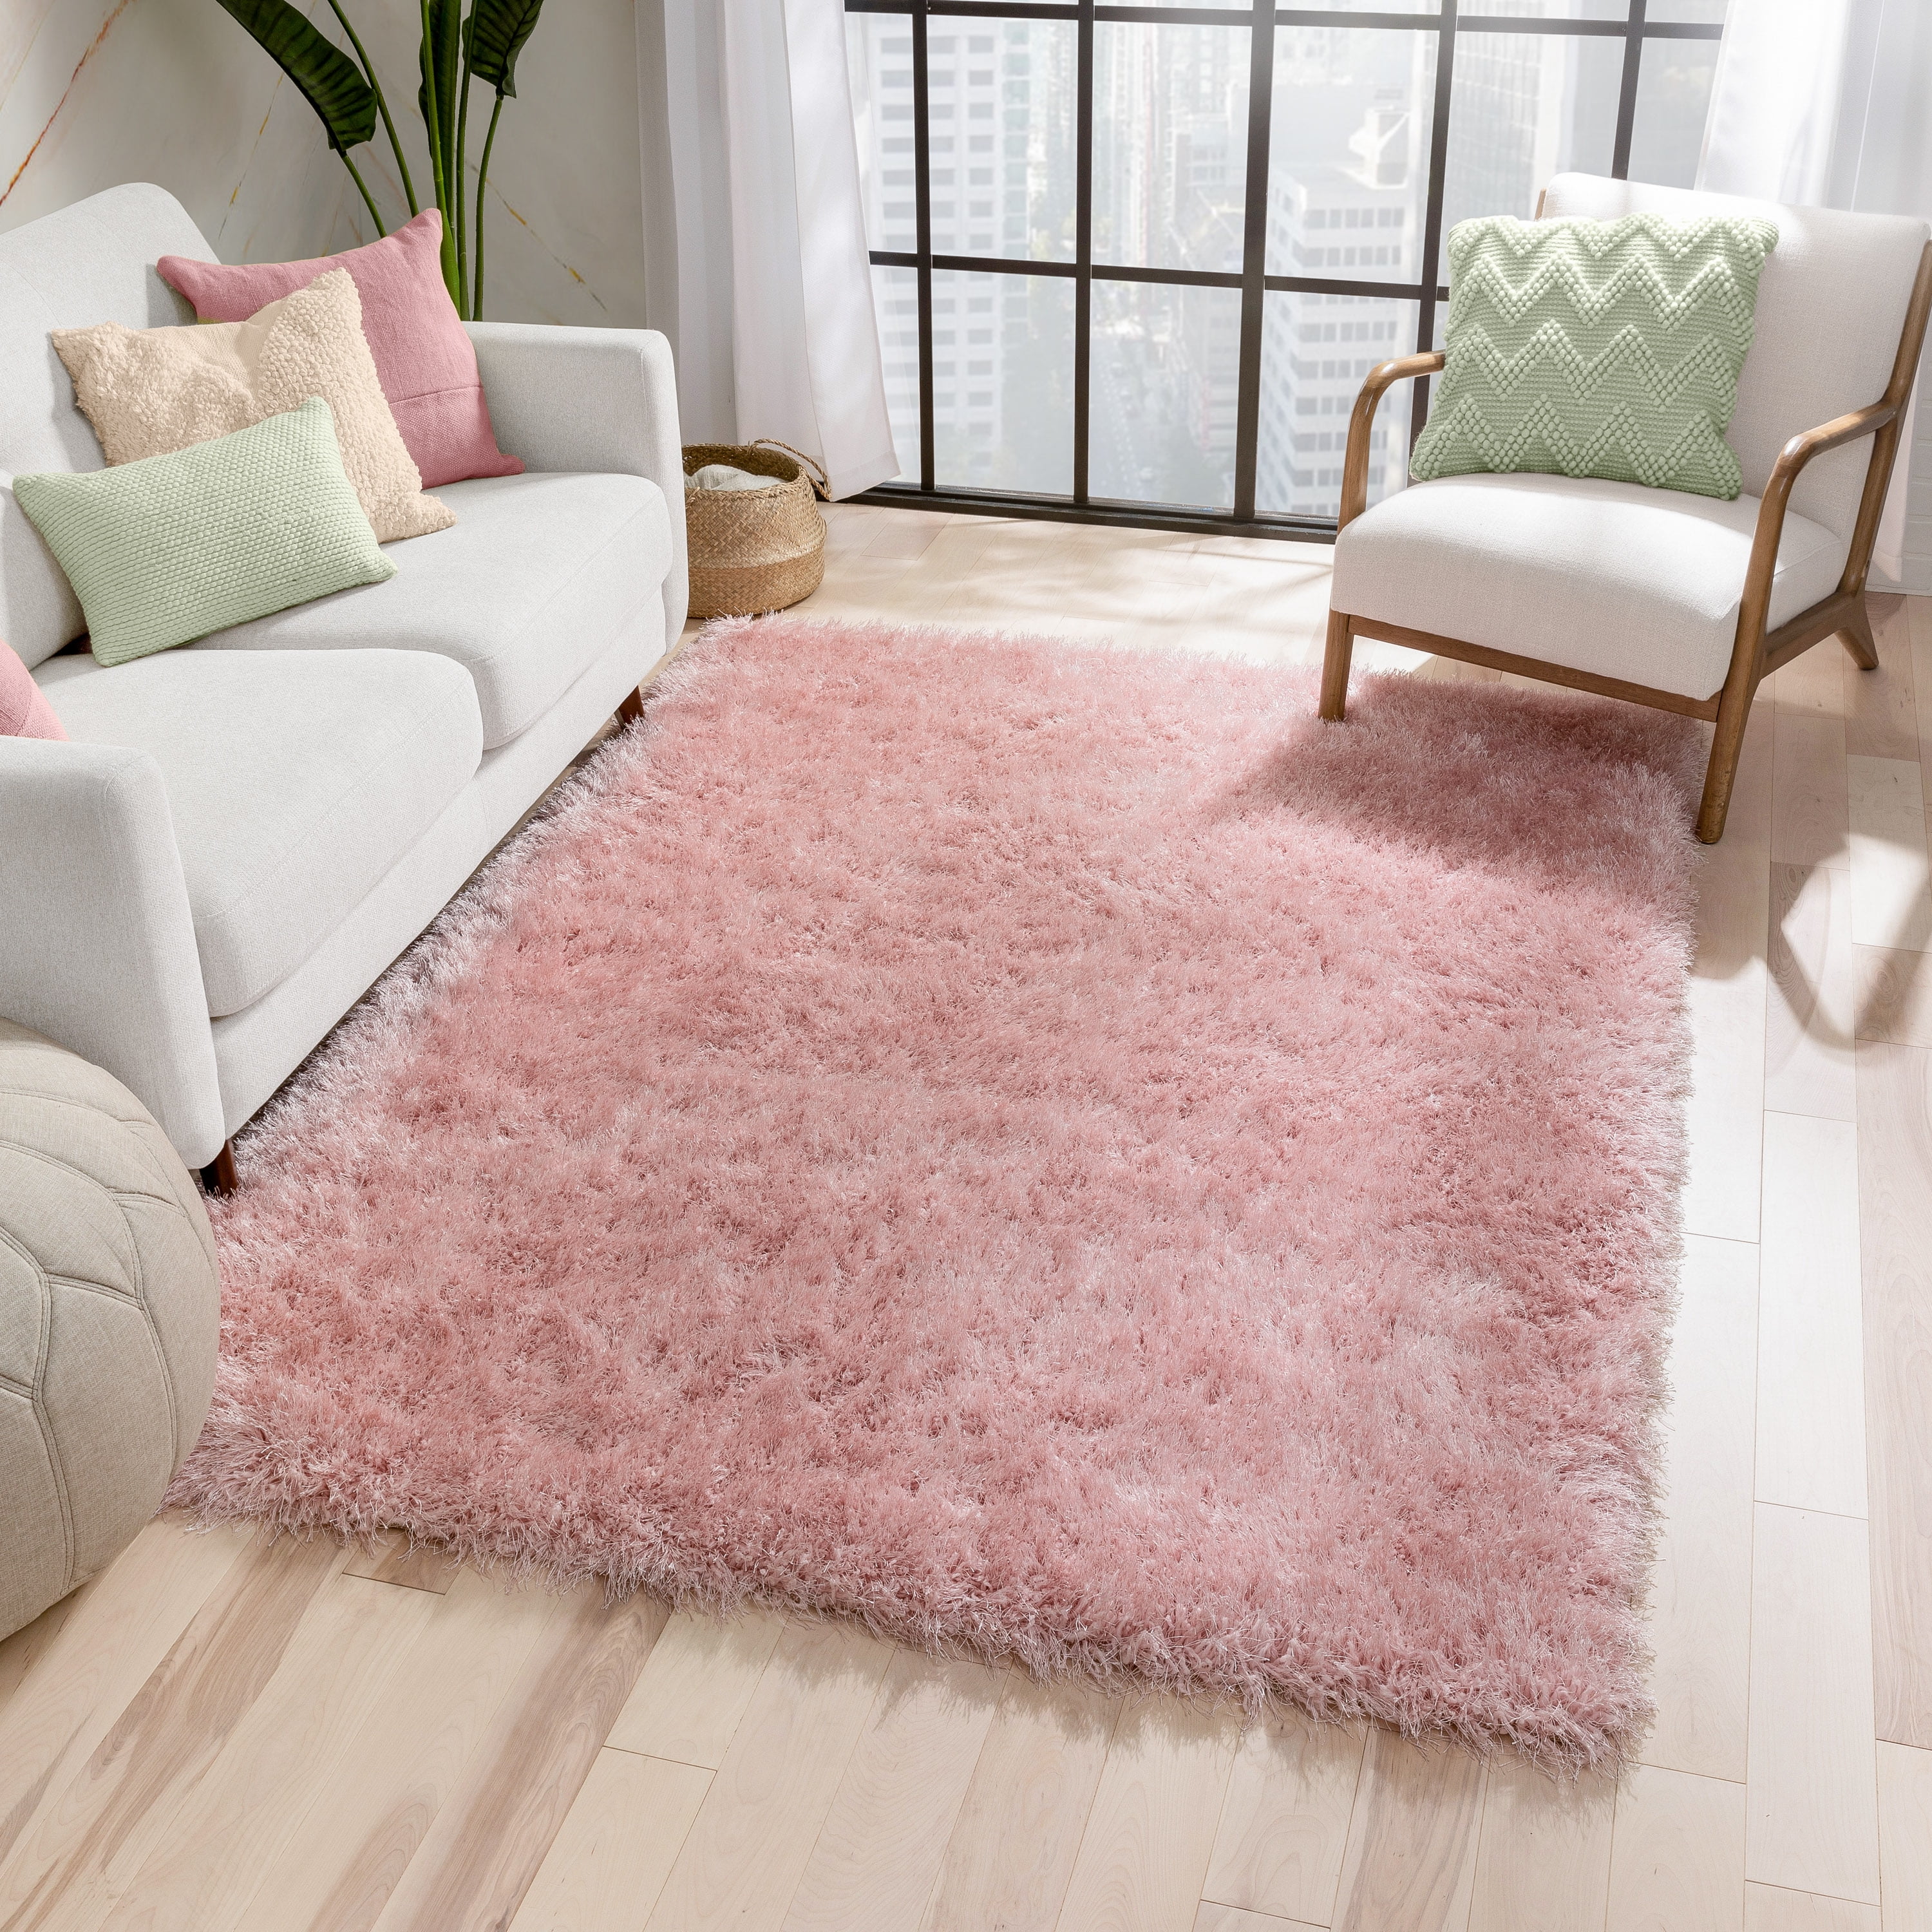 Blush Pink Geometric Rug Small Large Soft Warm Living Room Rugs Long Hall Runner 